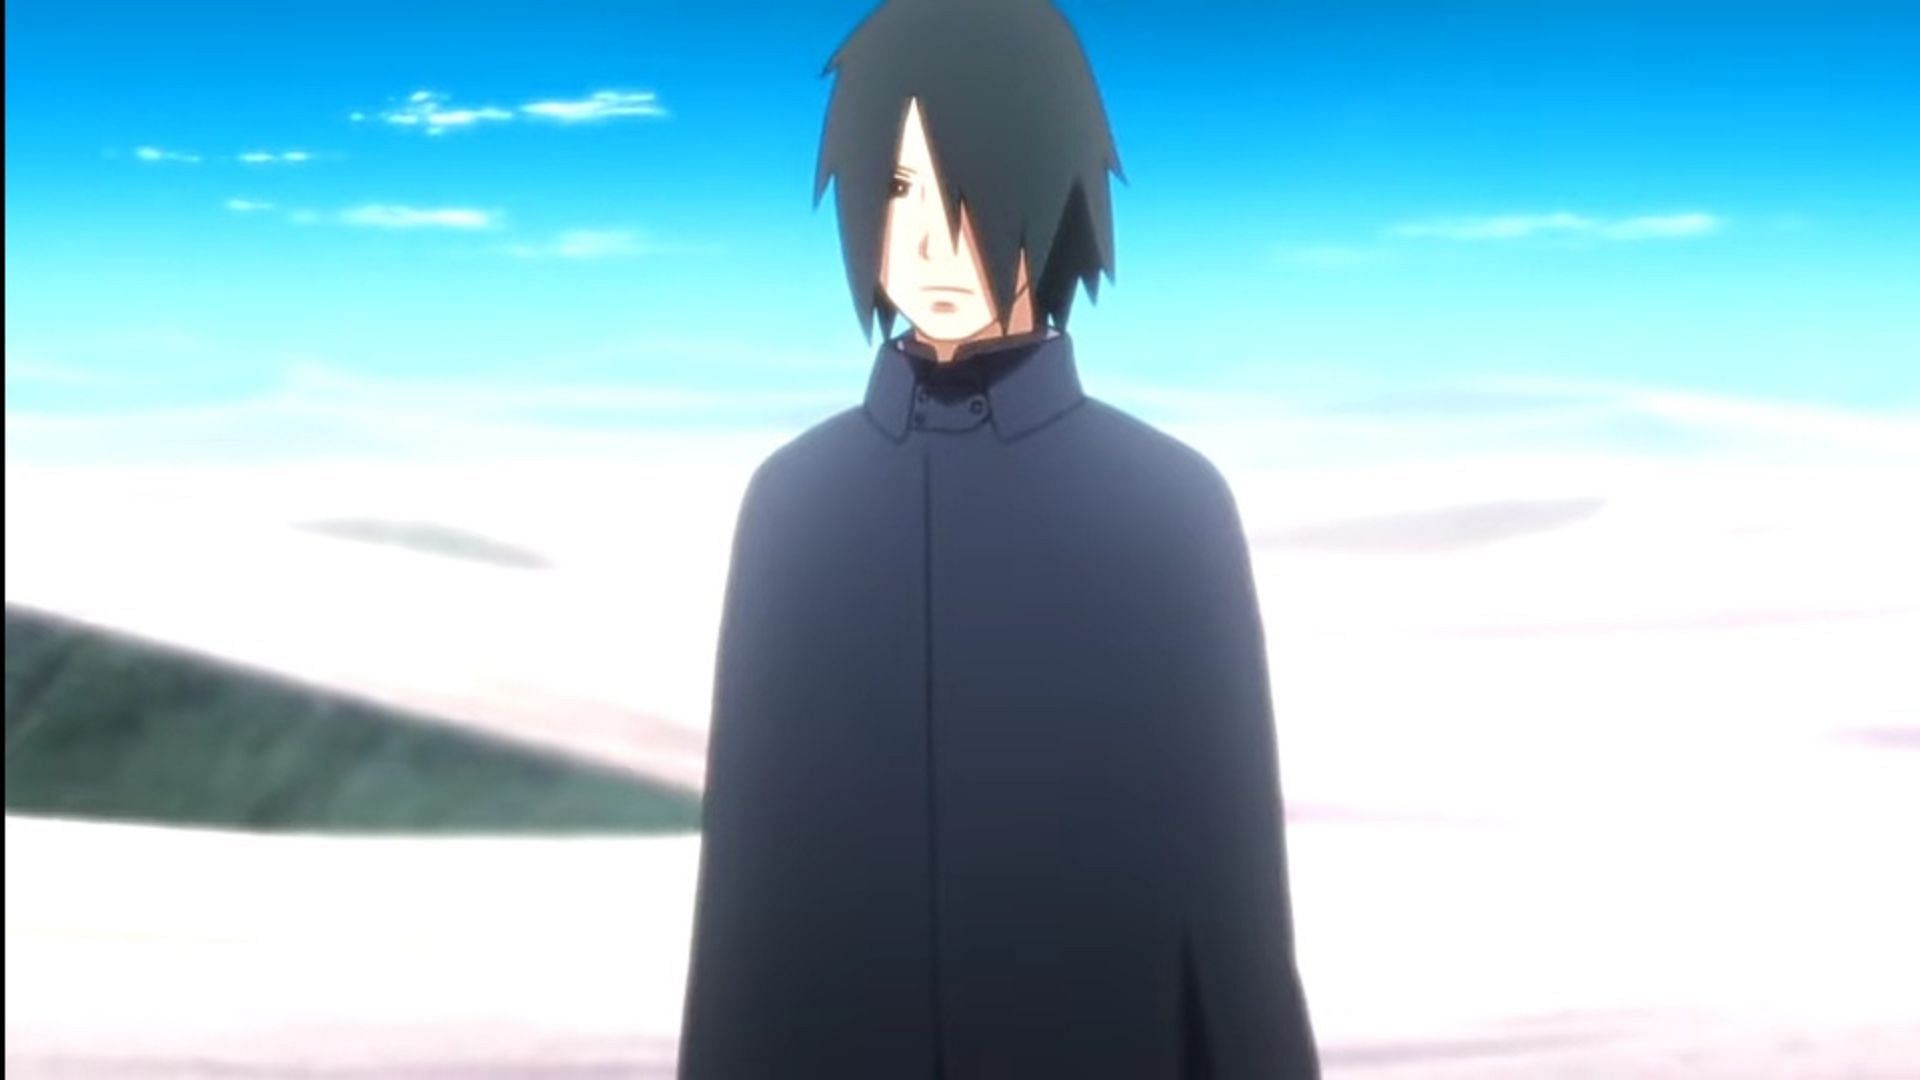 Sasuke in the Boruto anime series (Image via Studio Pierrot)